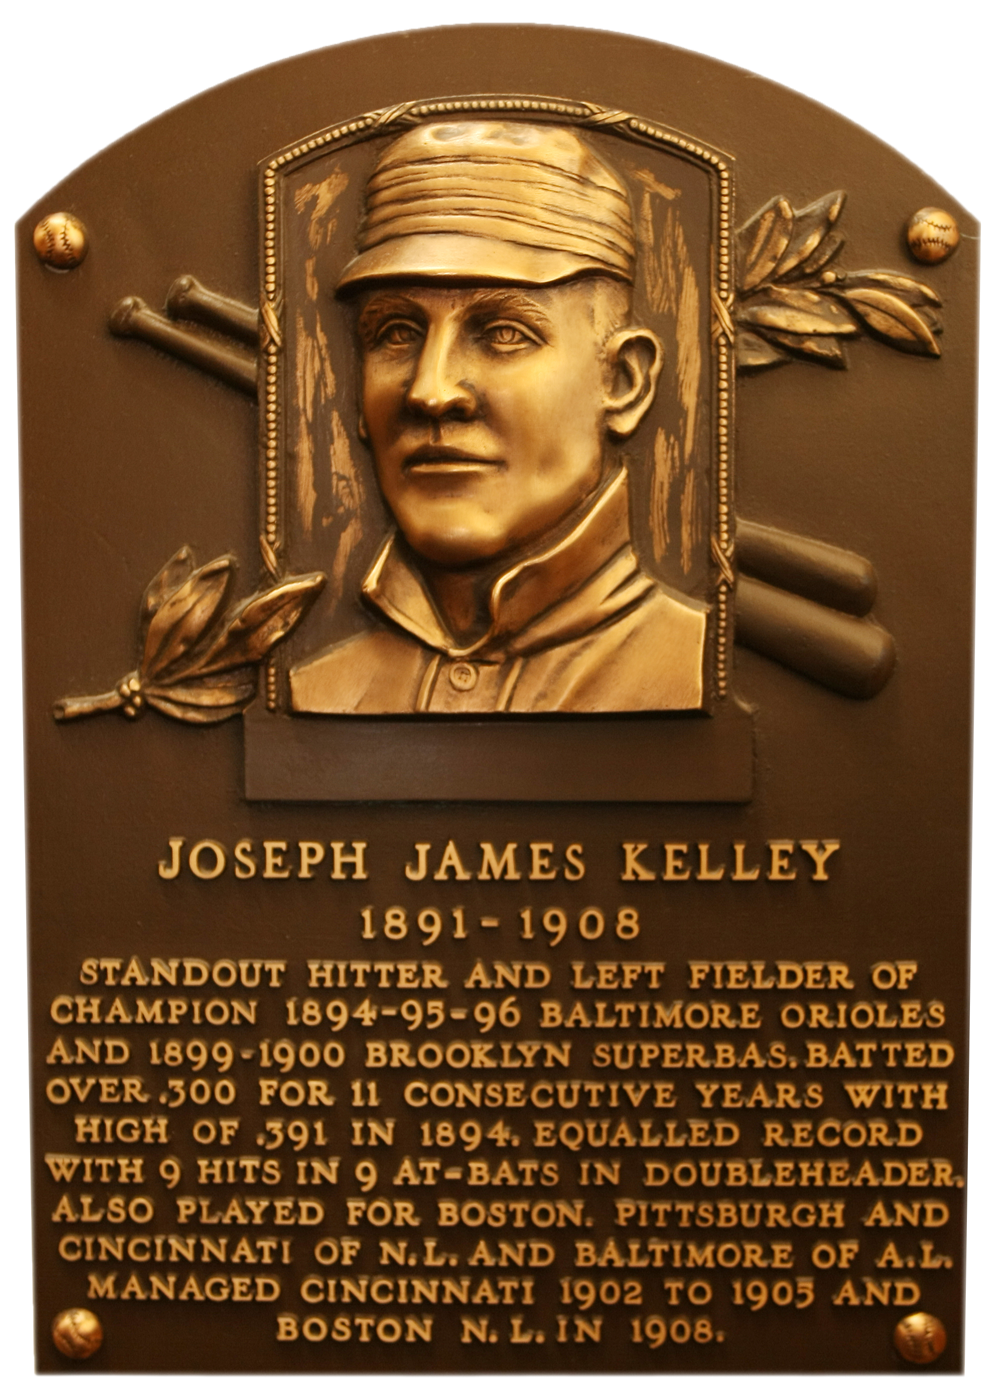 Joe Kelley Hall of Fame plaque